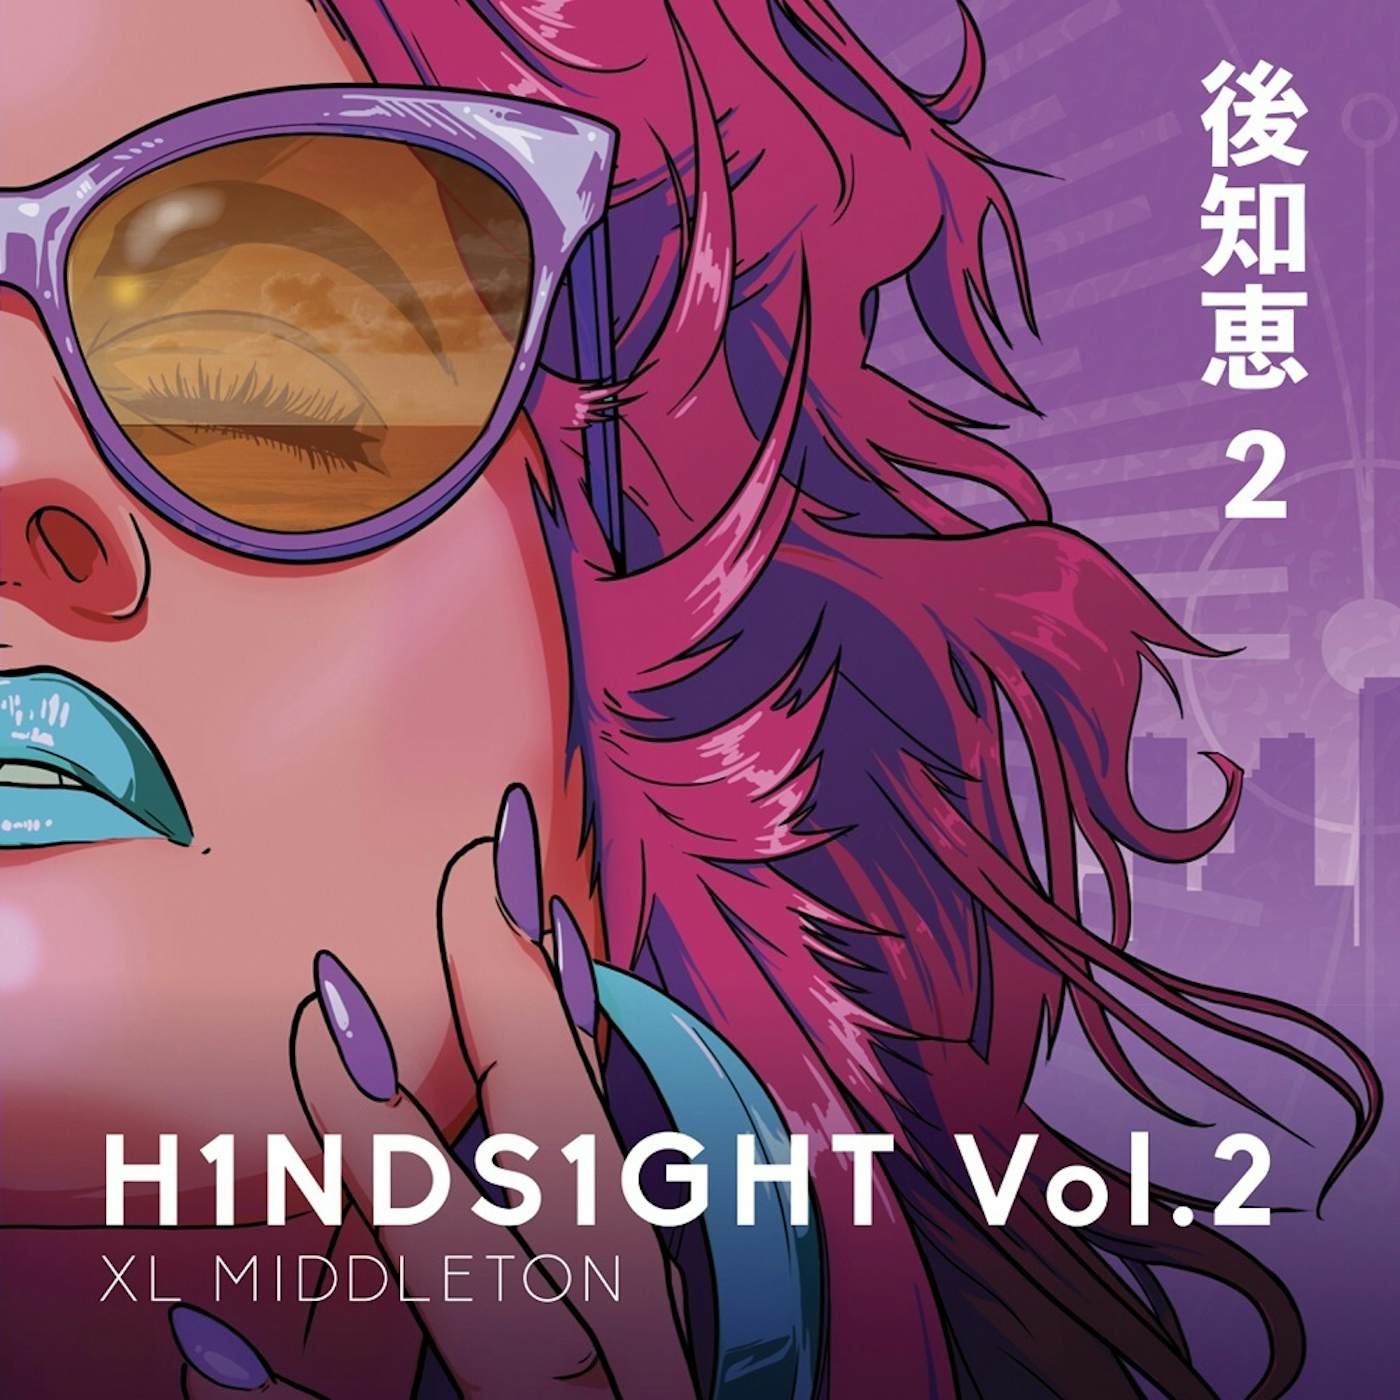 XL Middleton H1Nds1Ght: Vol. 2 Vinyl Record